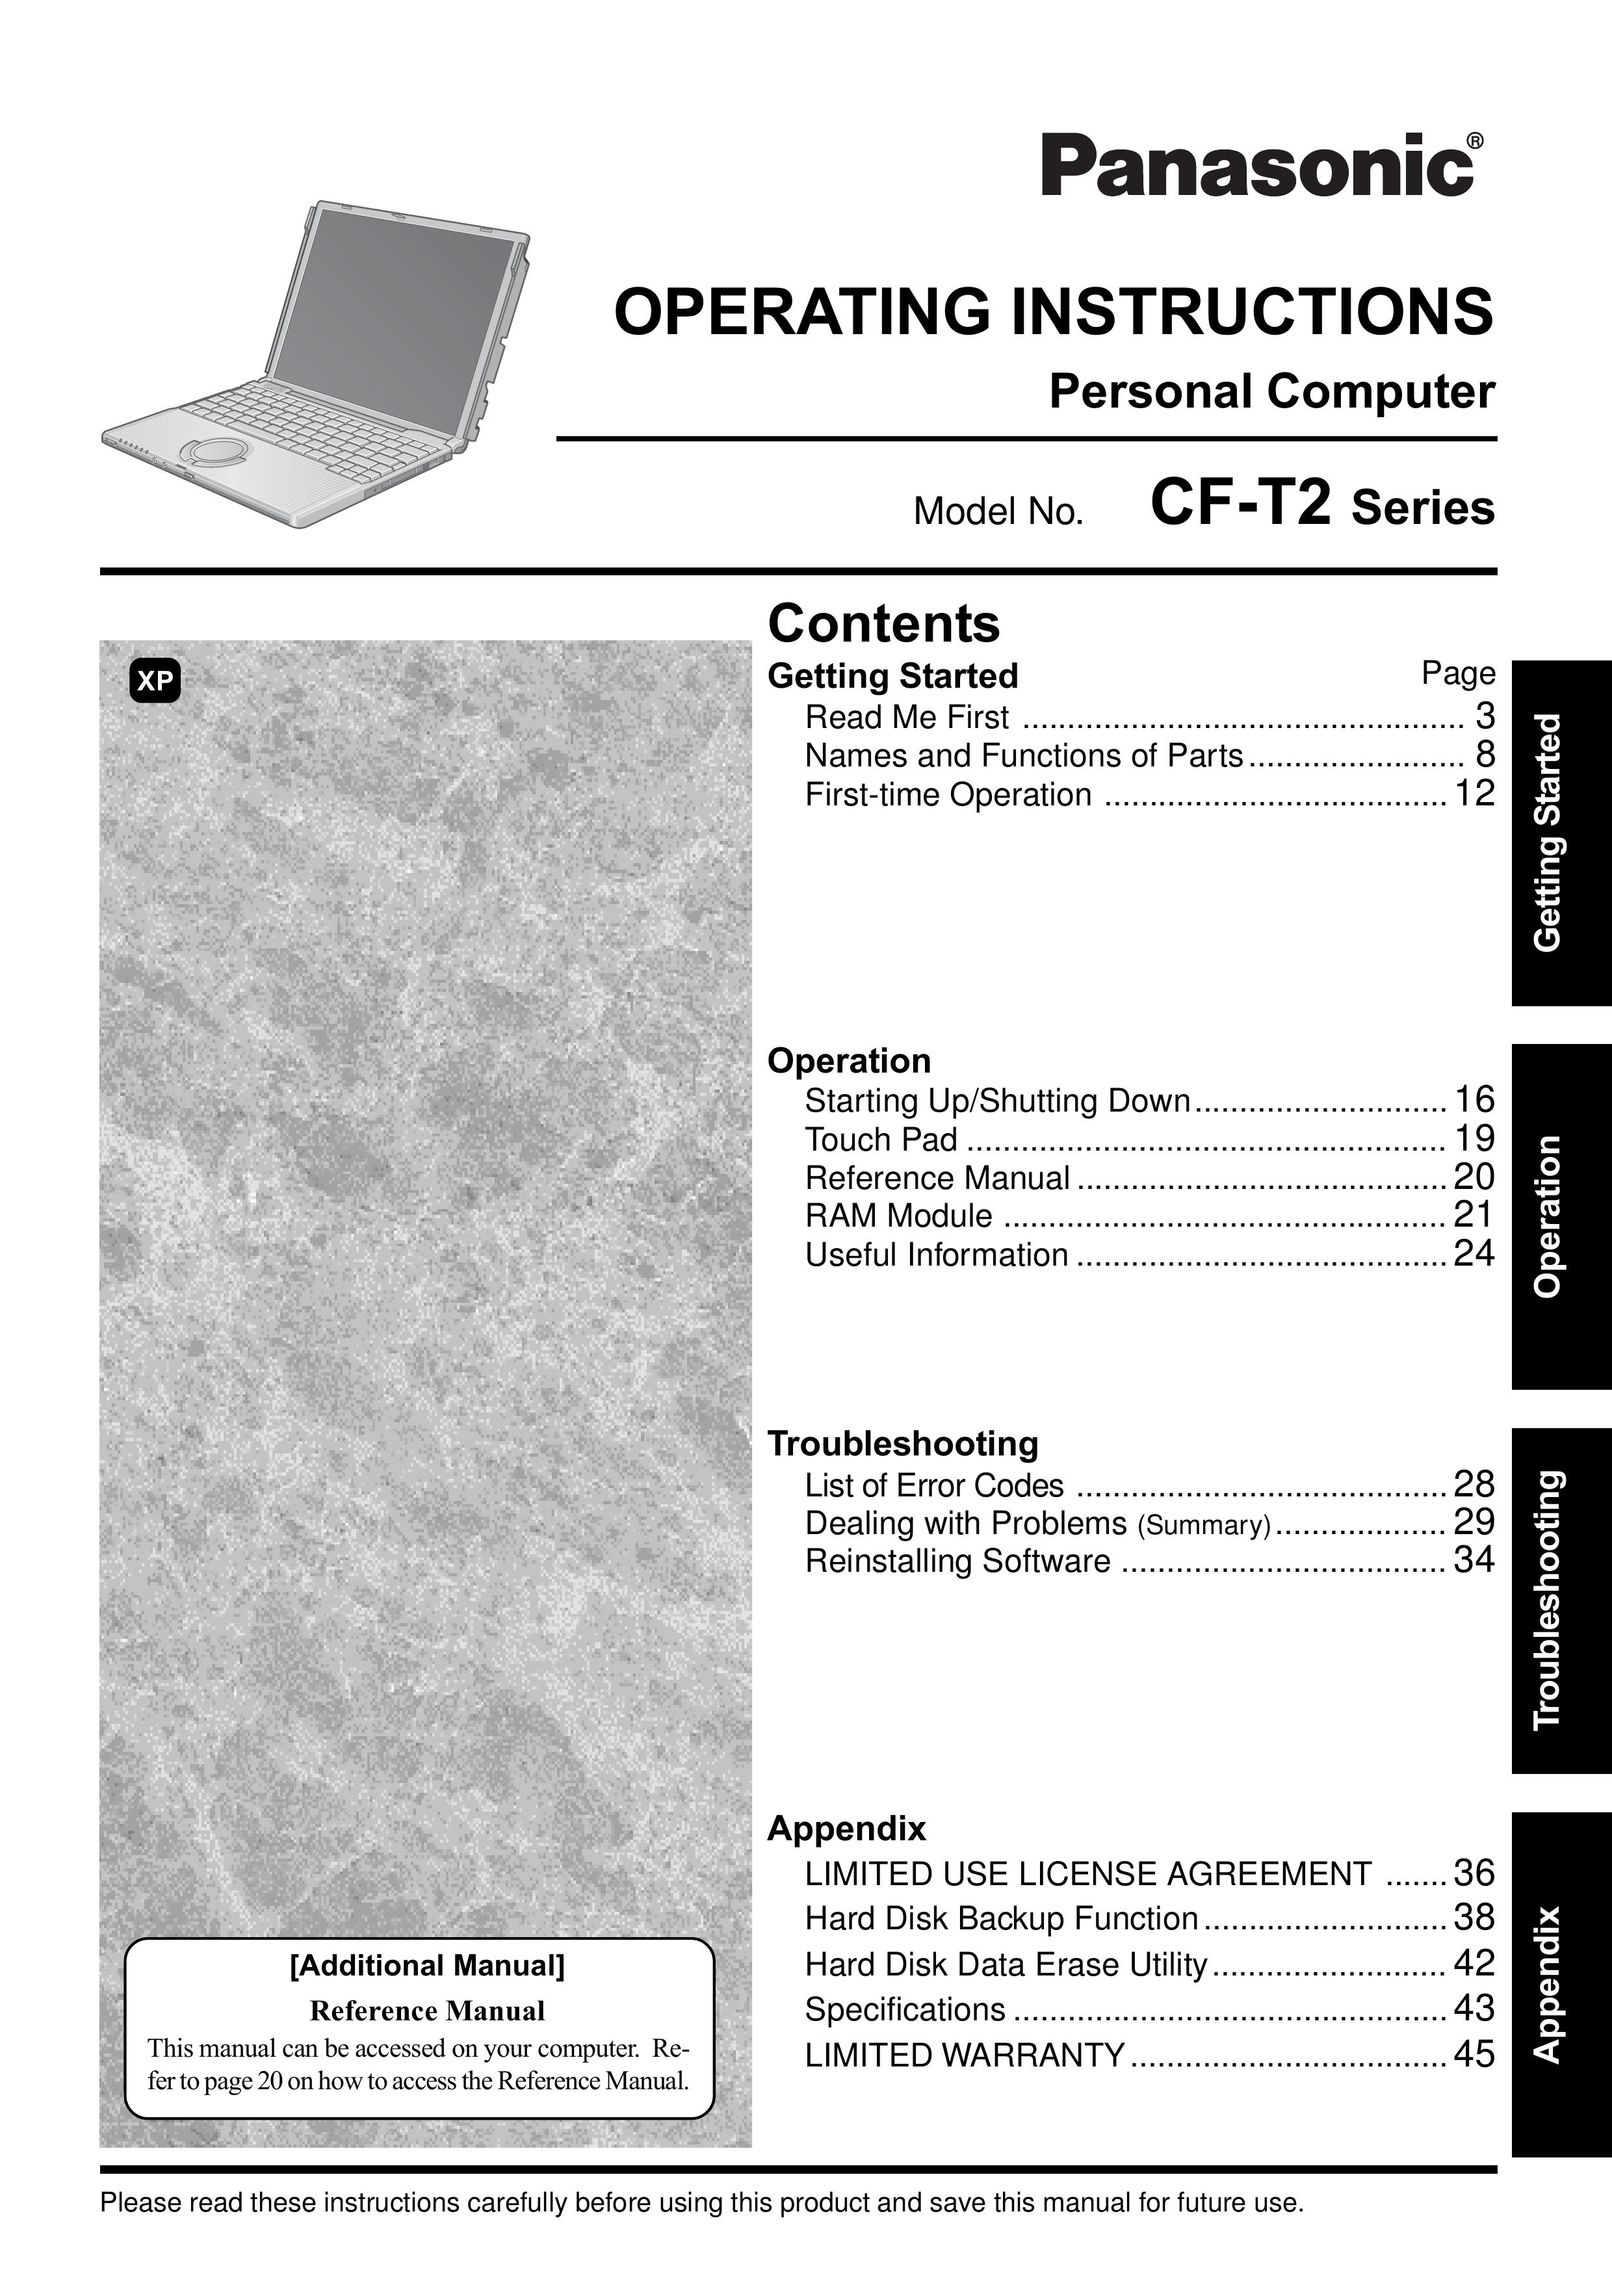 Panasonic CT-T2 Personal Computer User Manual